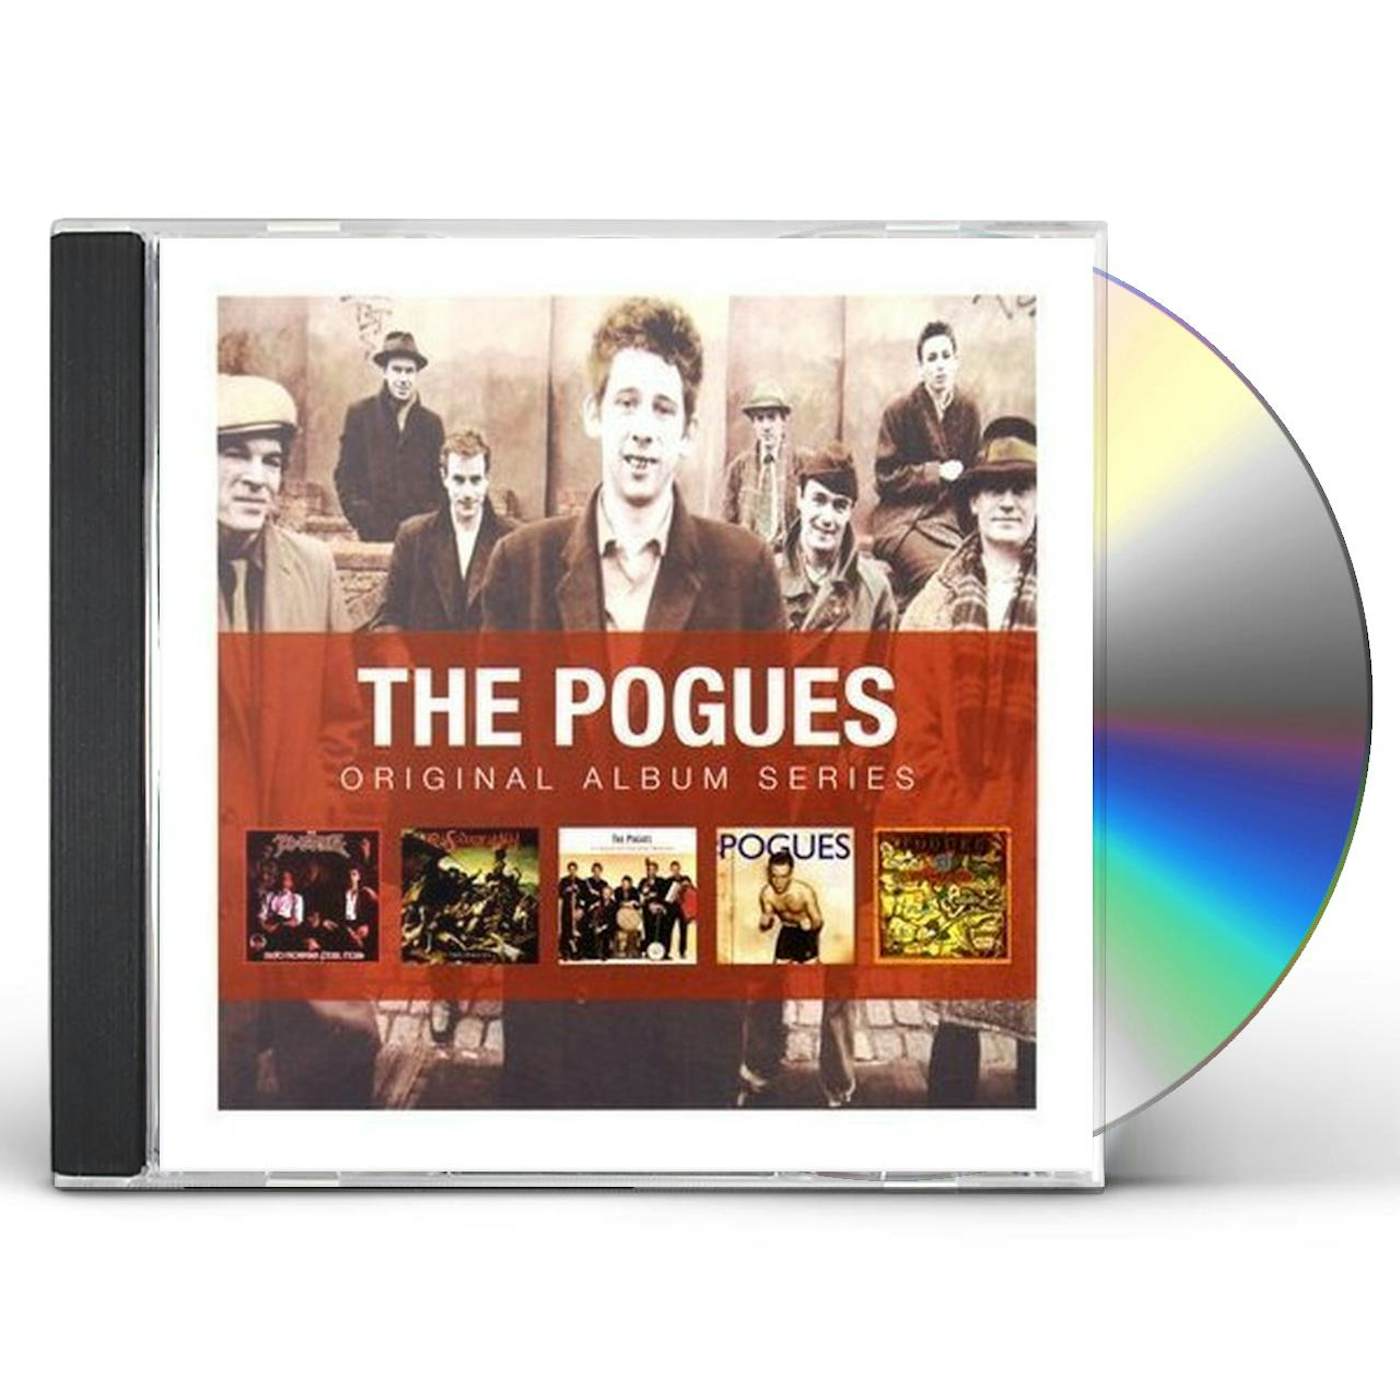 The Pogues ORIGINAL ALBUM SERIES CD